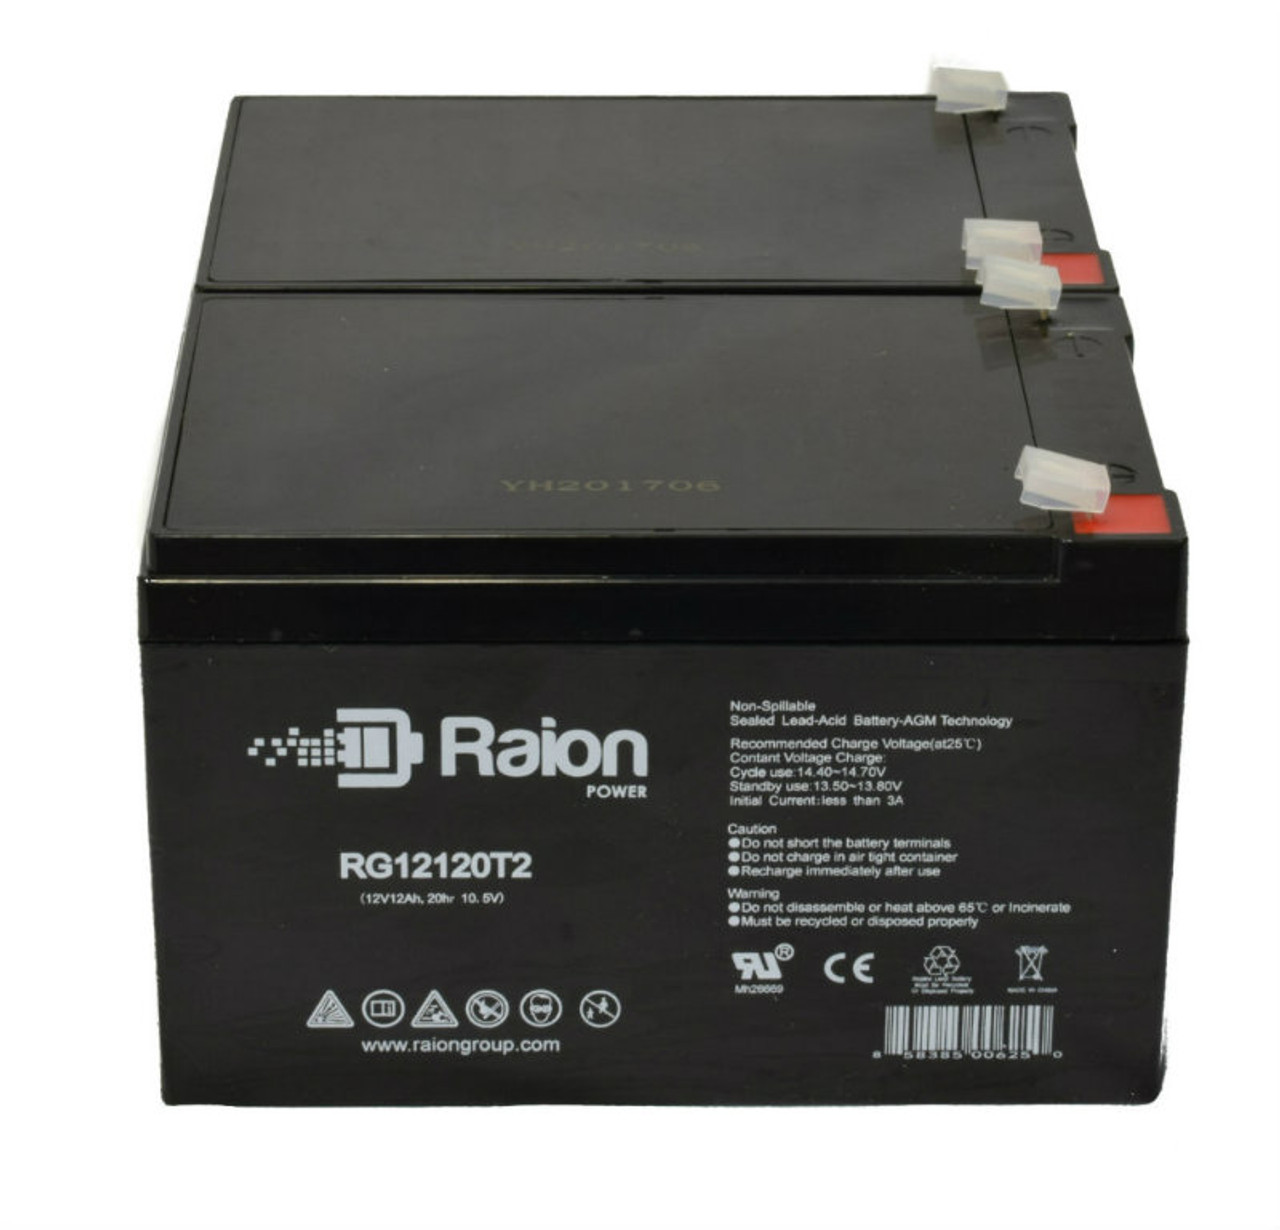 Raion Power 12V 12Ah Non-Spillable Compatible Replacement Battery for RIMA UN12-12 - (2 Pack)